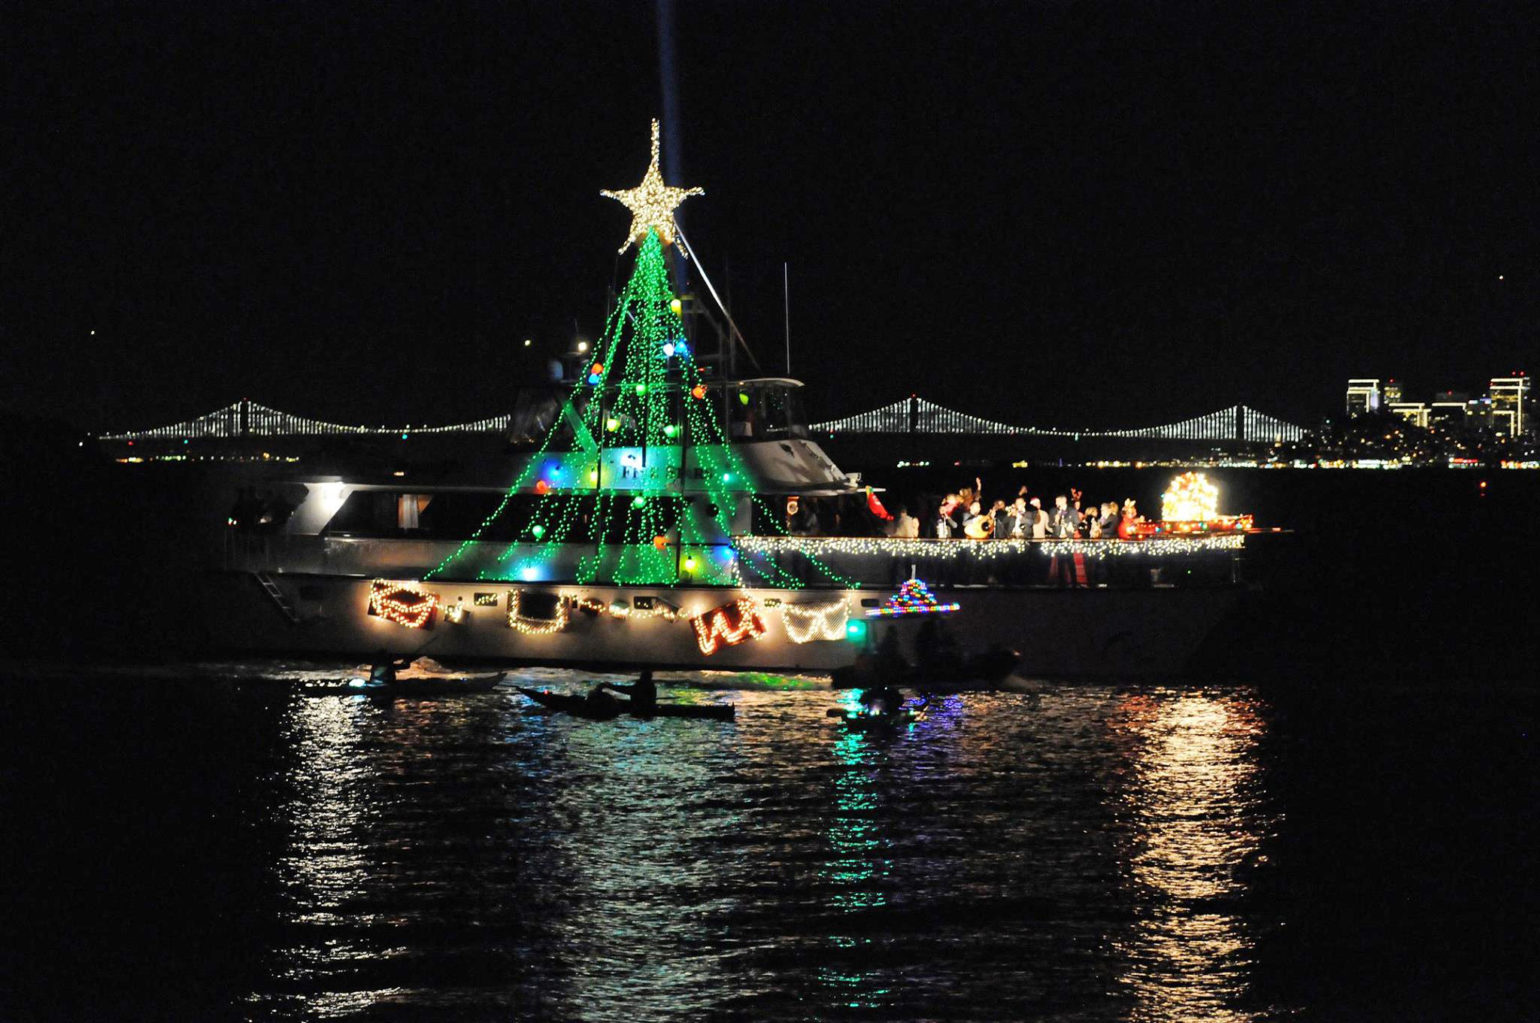 Sausalito Lighted Boat Parade